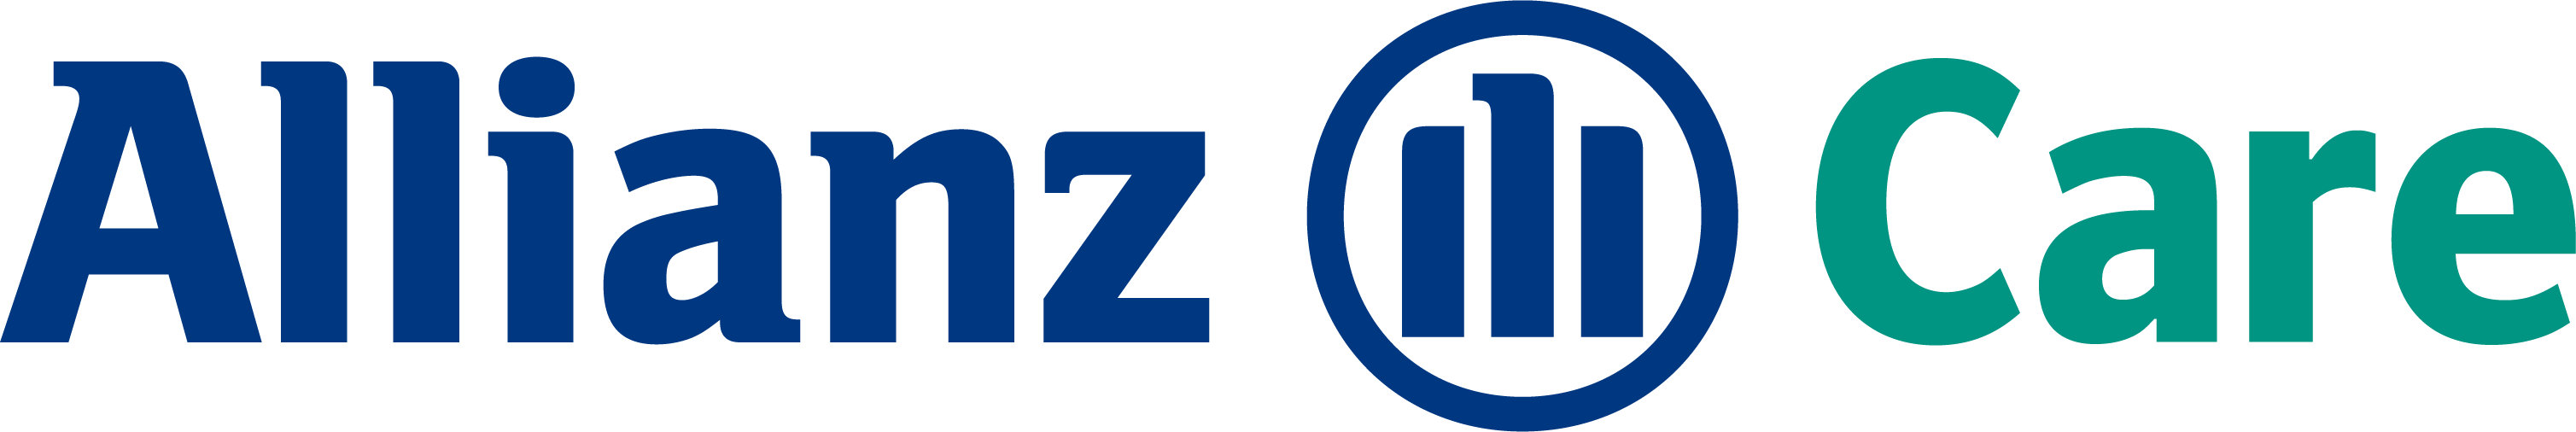  Allianz care-logo